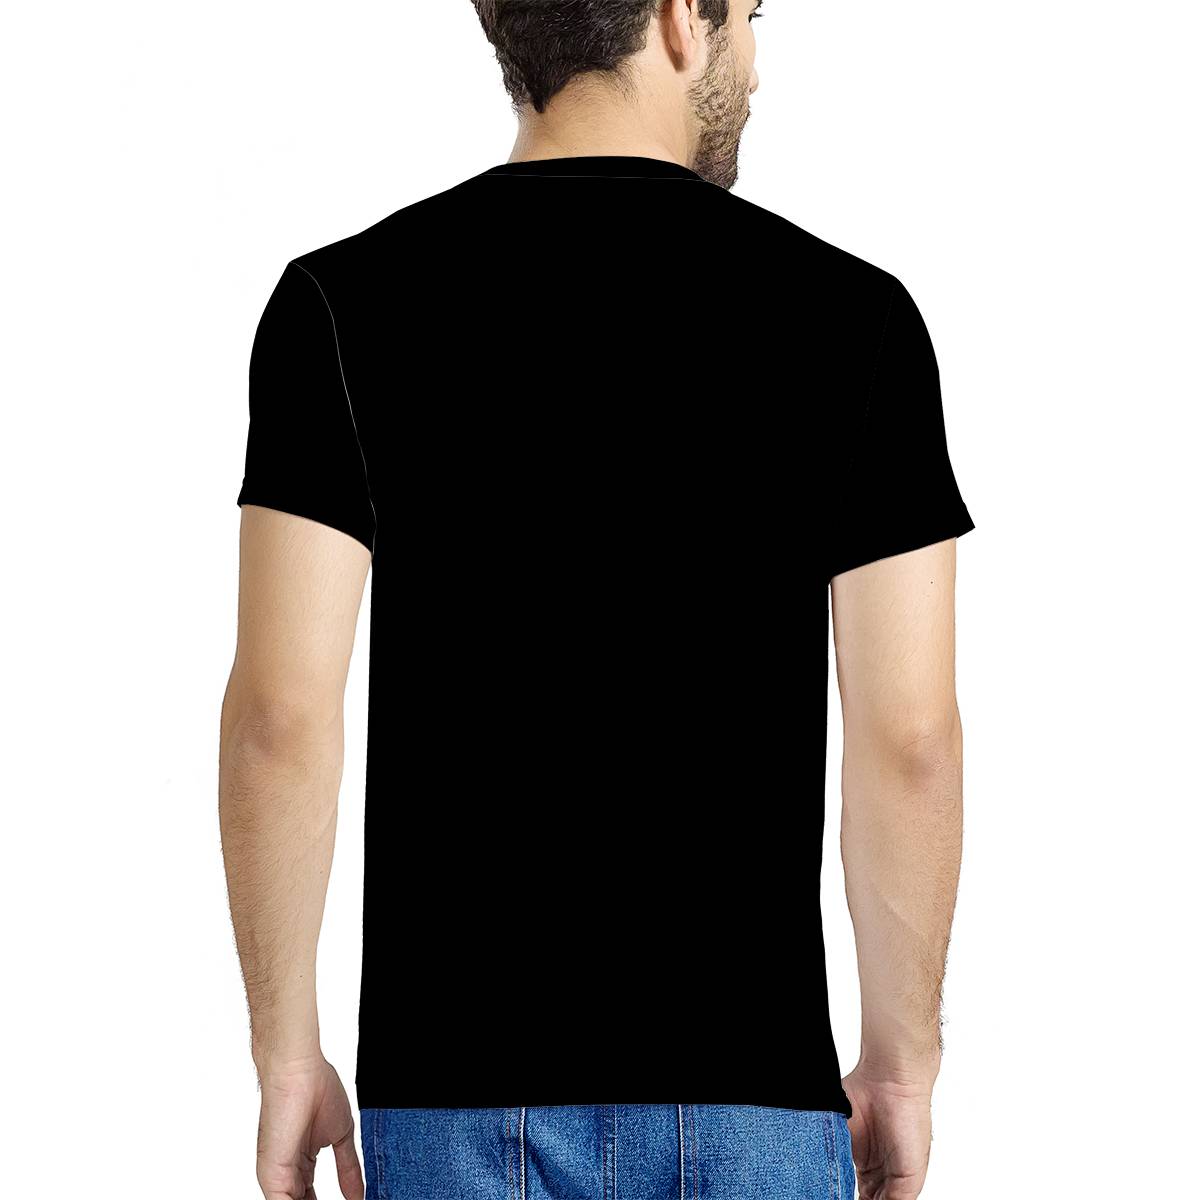 -- DV-007 Single Side Print Black T-shirt --